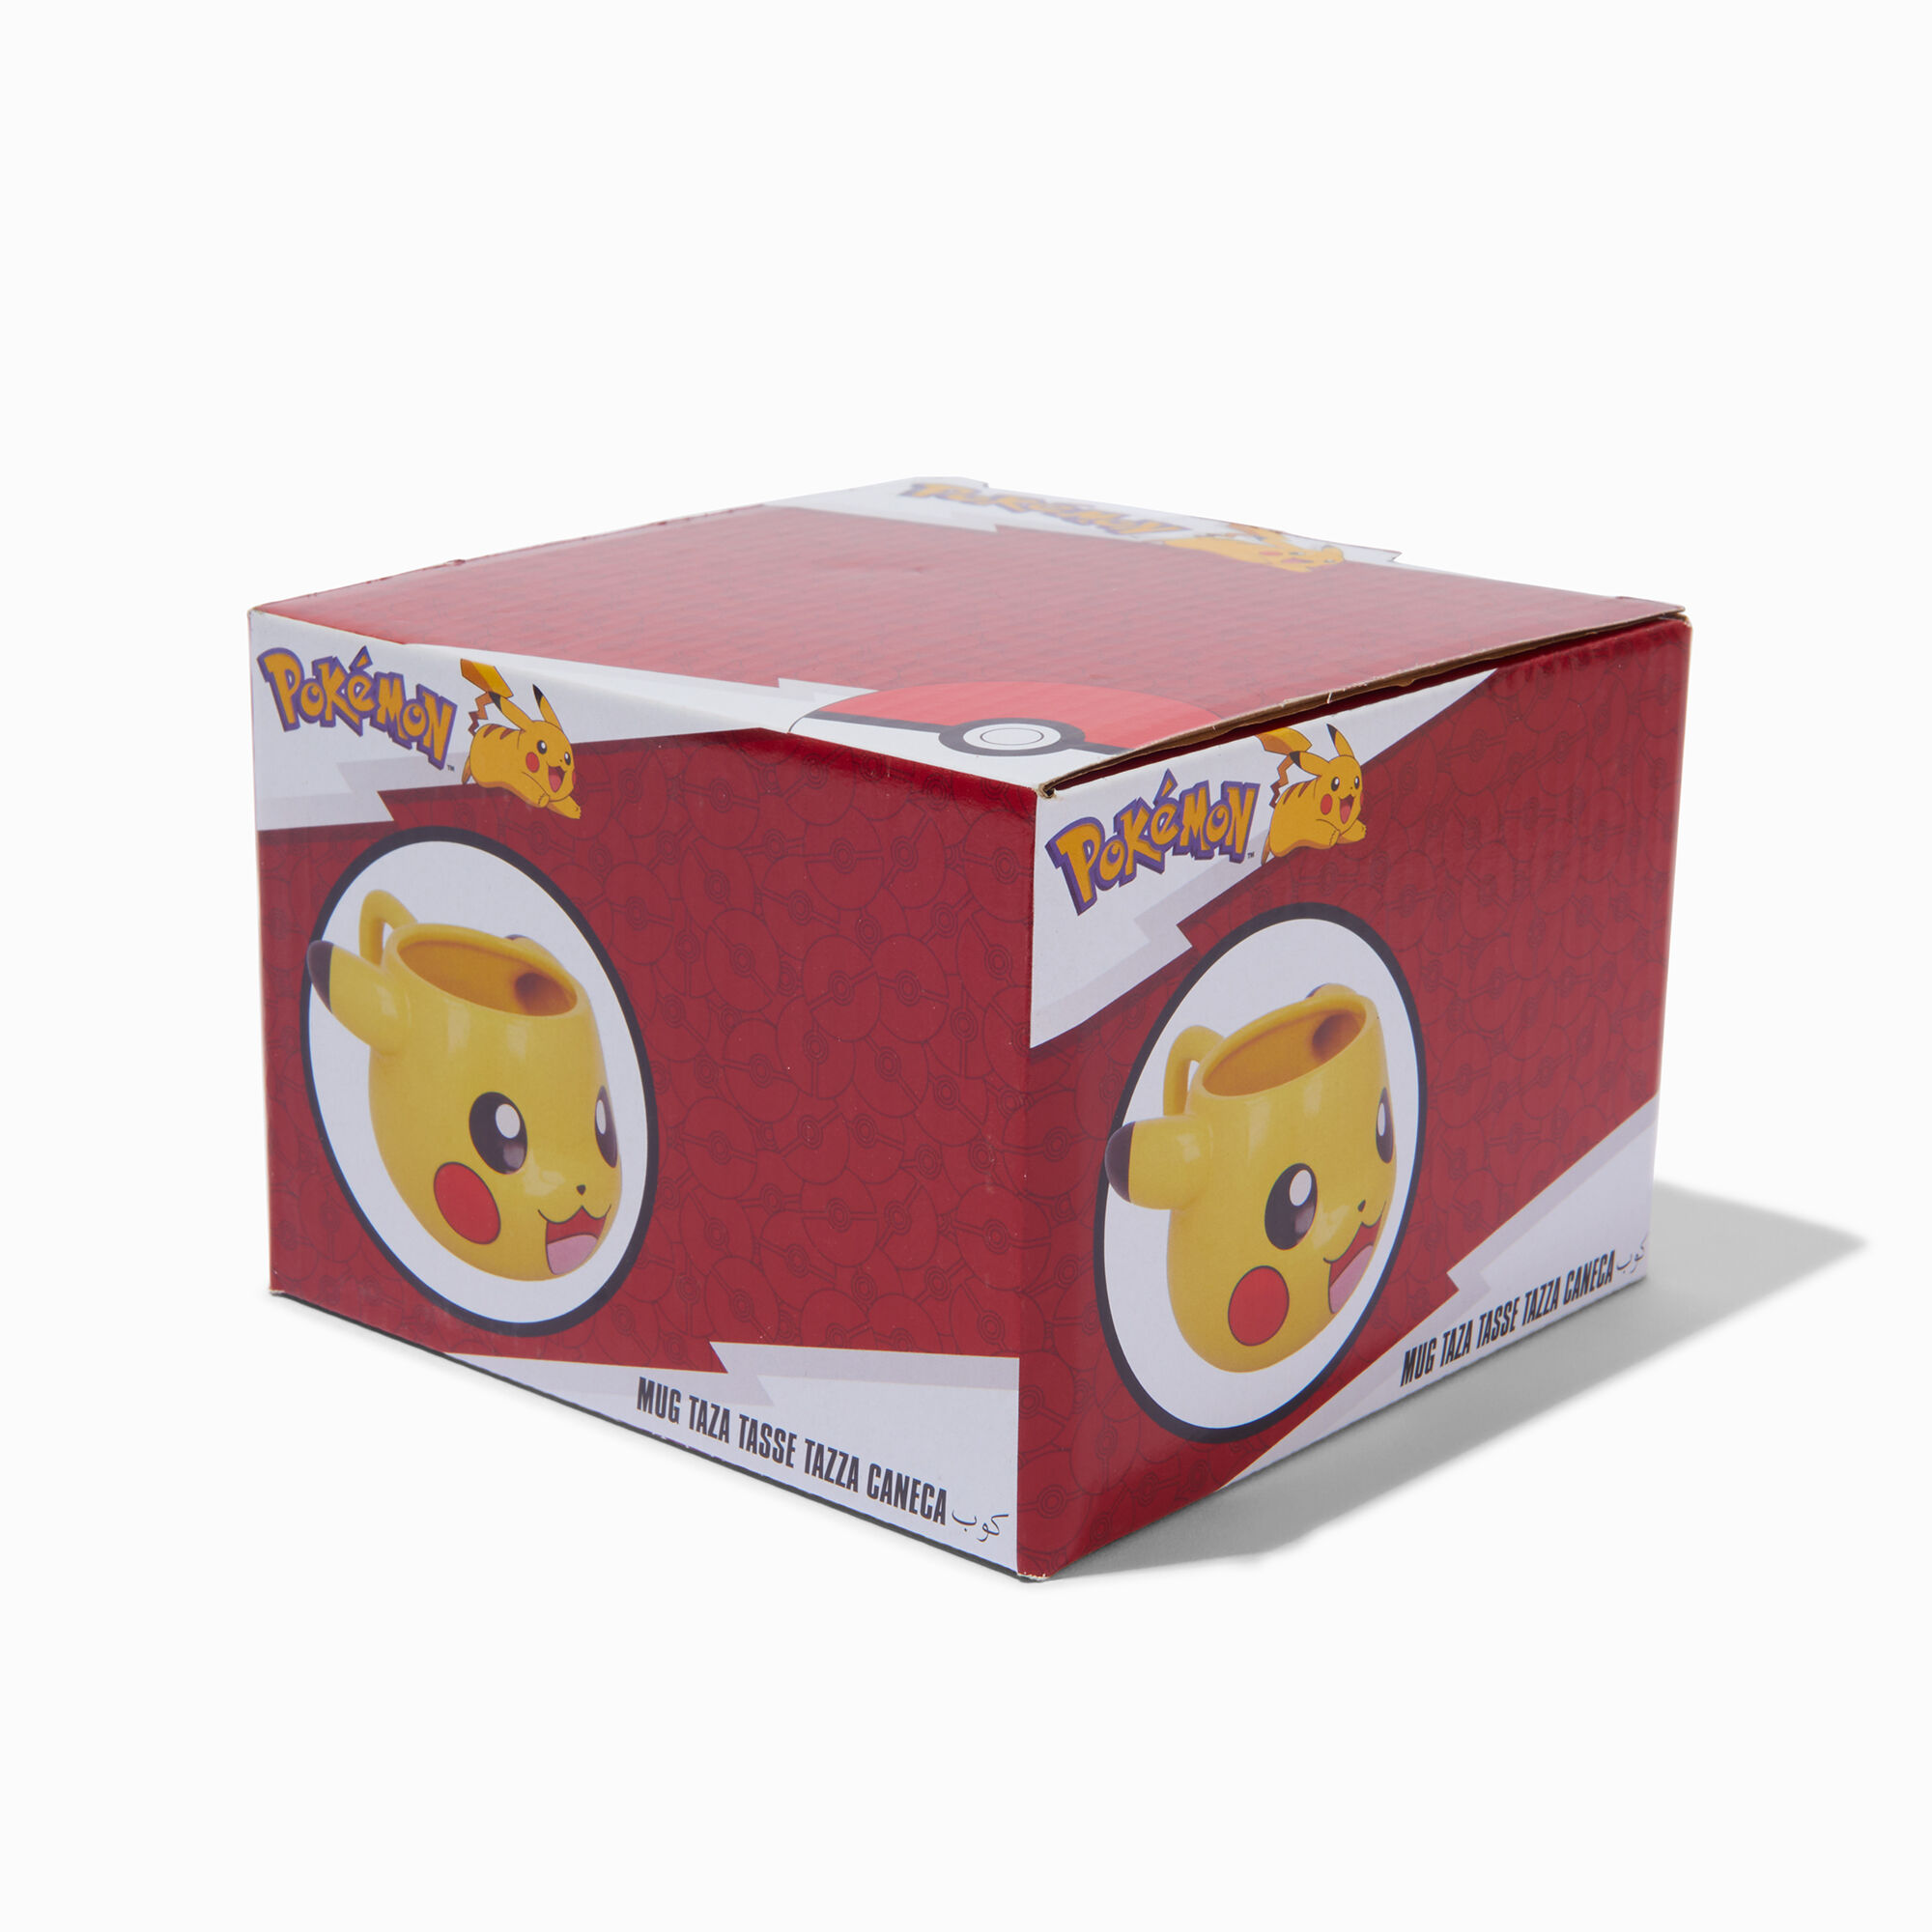 View Claires Pokémon Pikachu 3D Ceramic Mug information